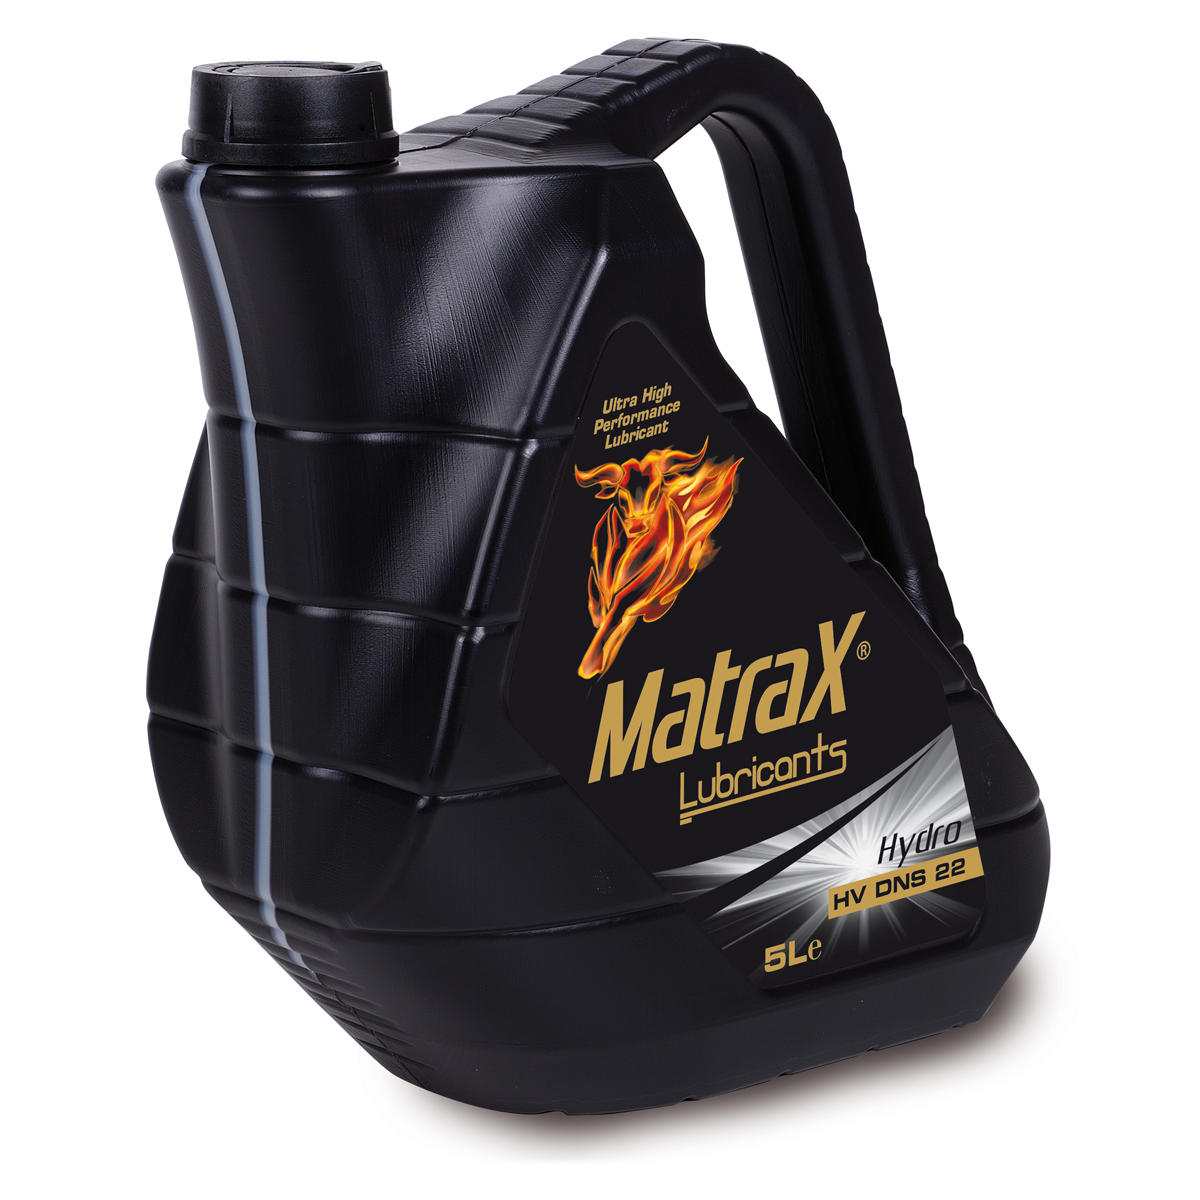 matrax-lubricants-hydro-hv-dns-22-5l